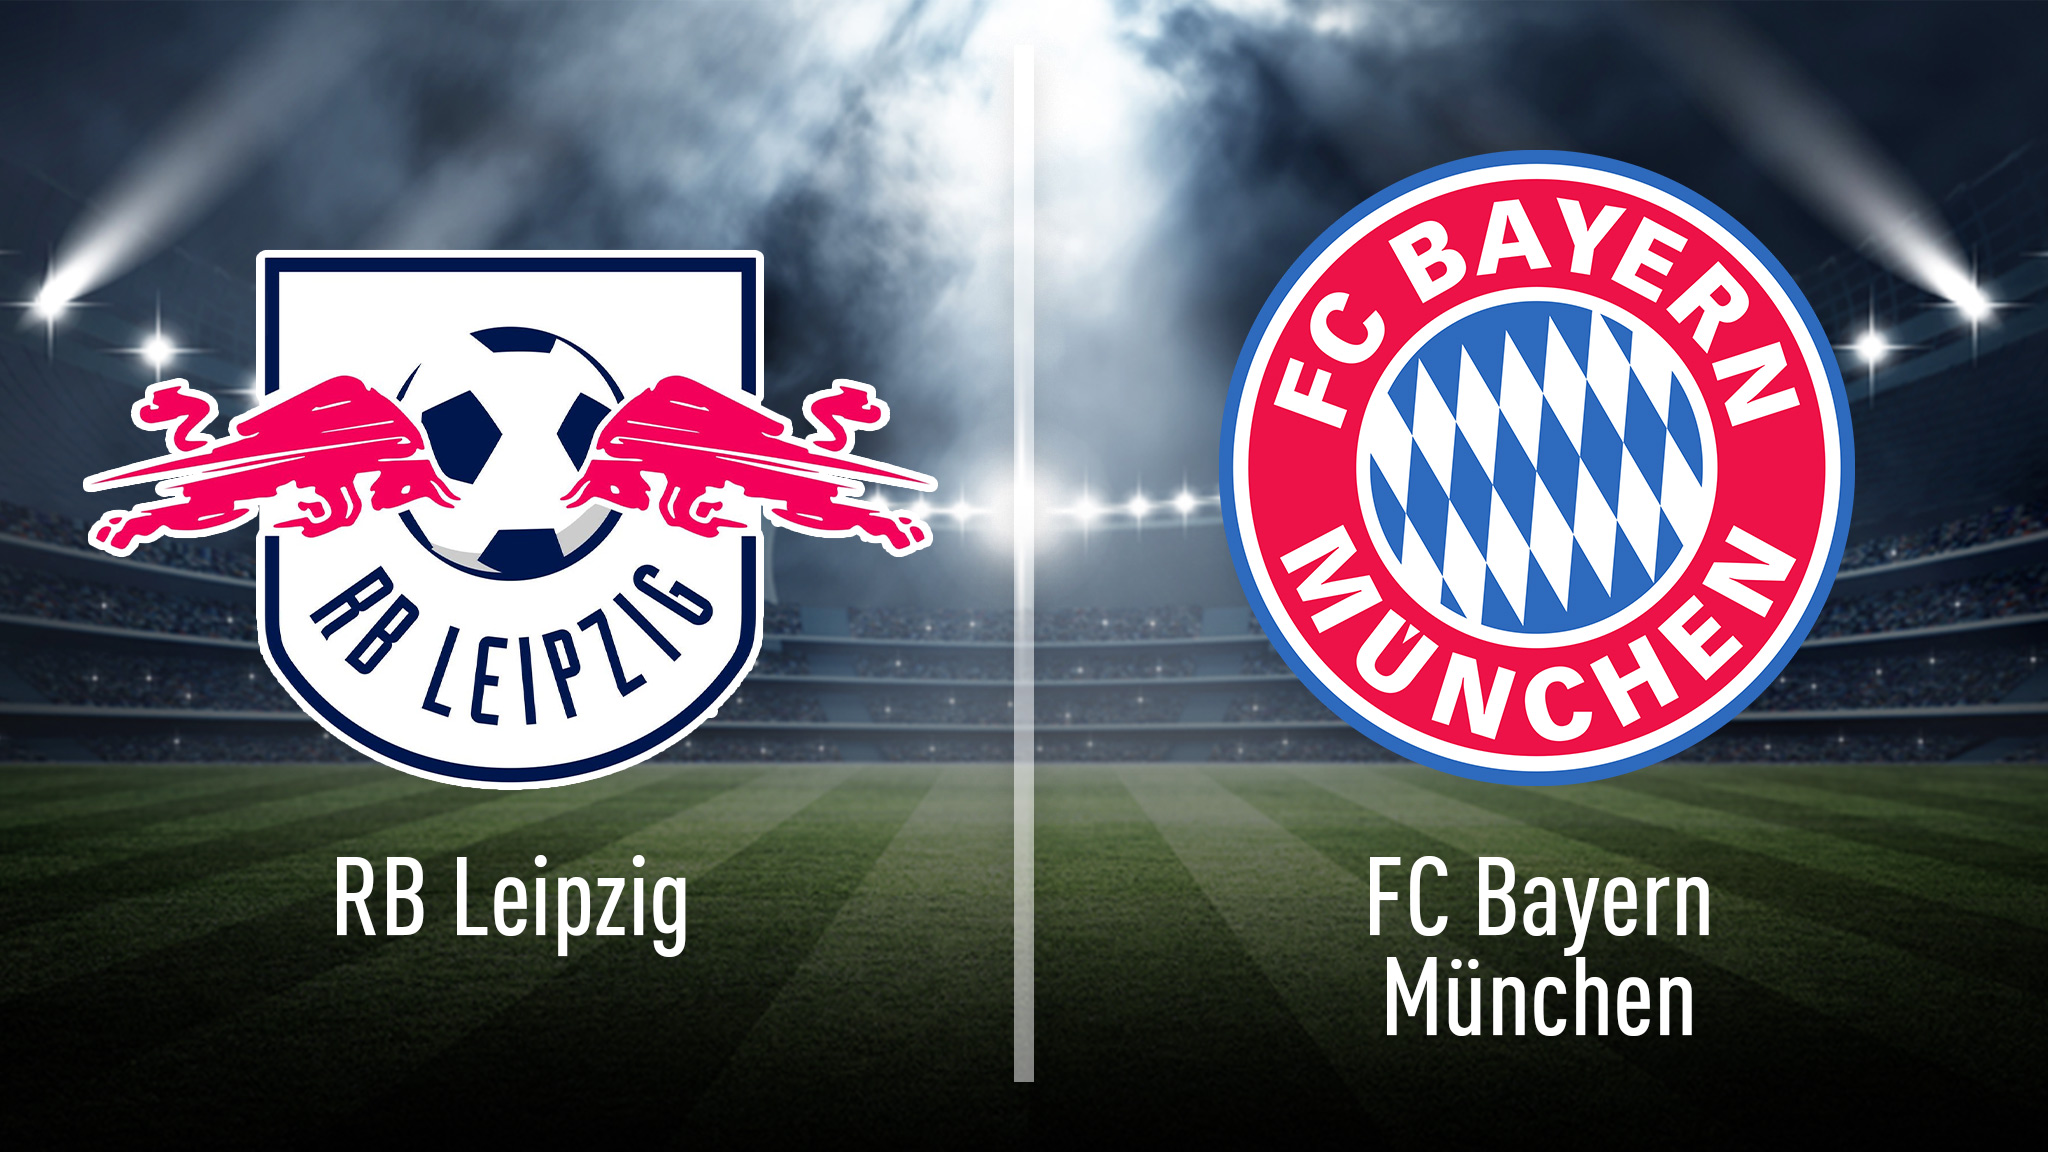 German League Watch a live broadcast of Leipzig against Bayern Munich